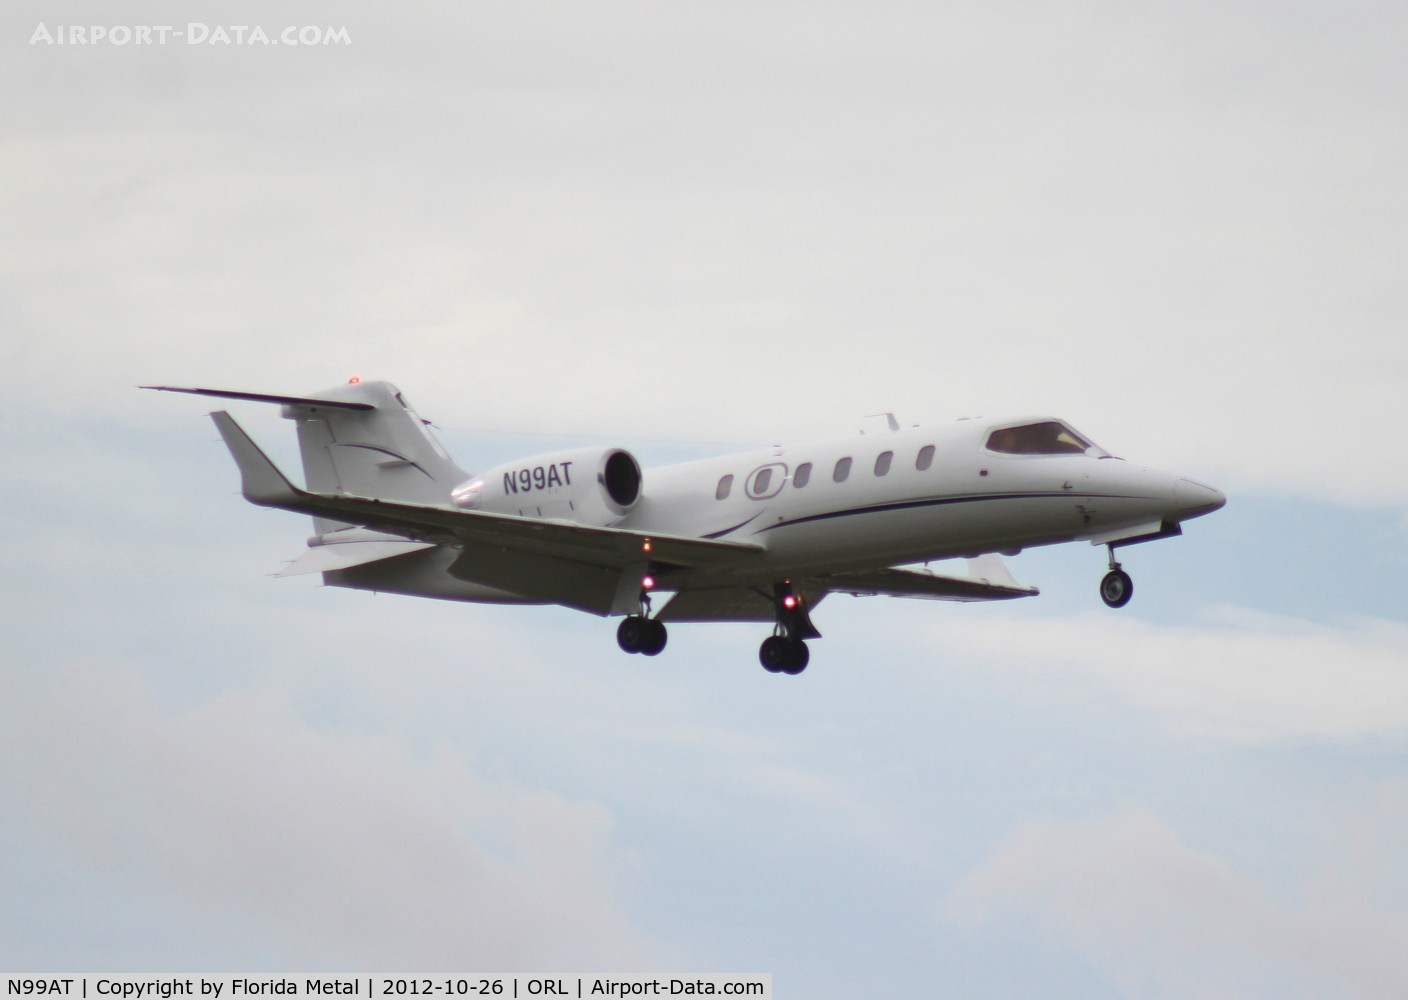 N99AT, 2000 Learjet 31A C/N 31A-202, Lear 31A at NBAA